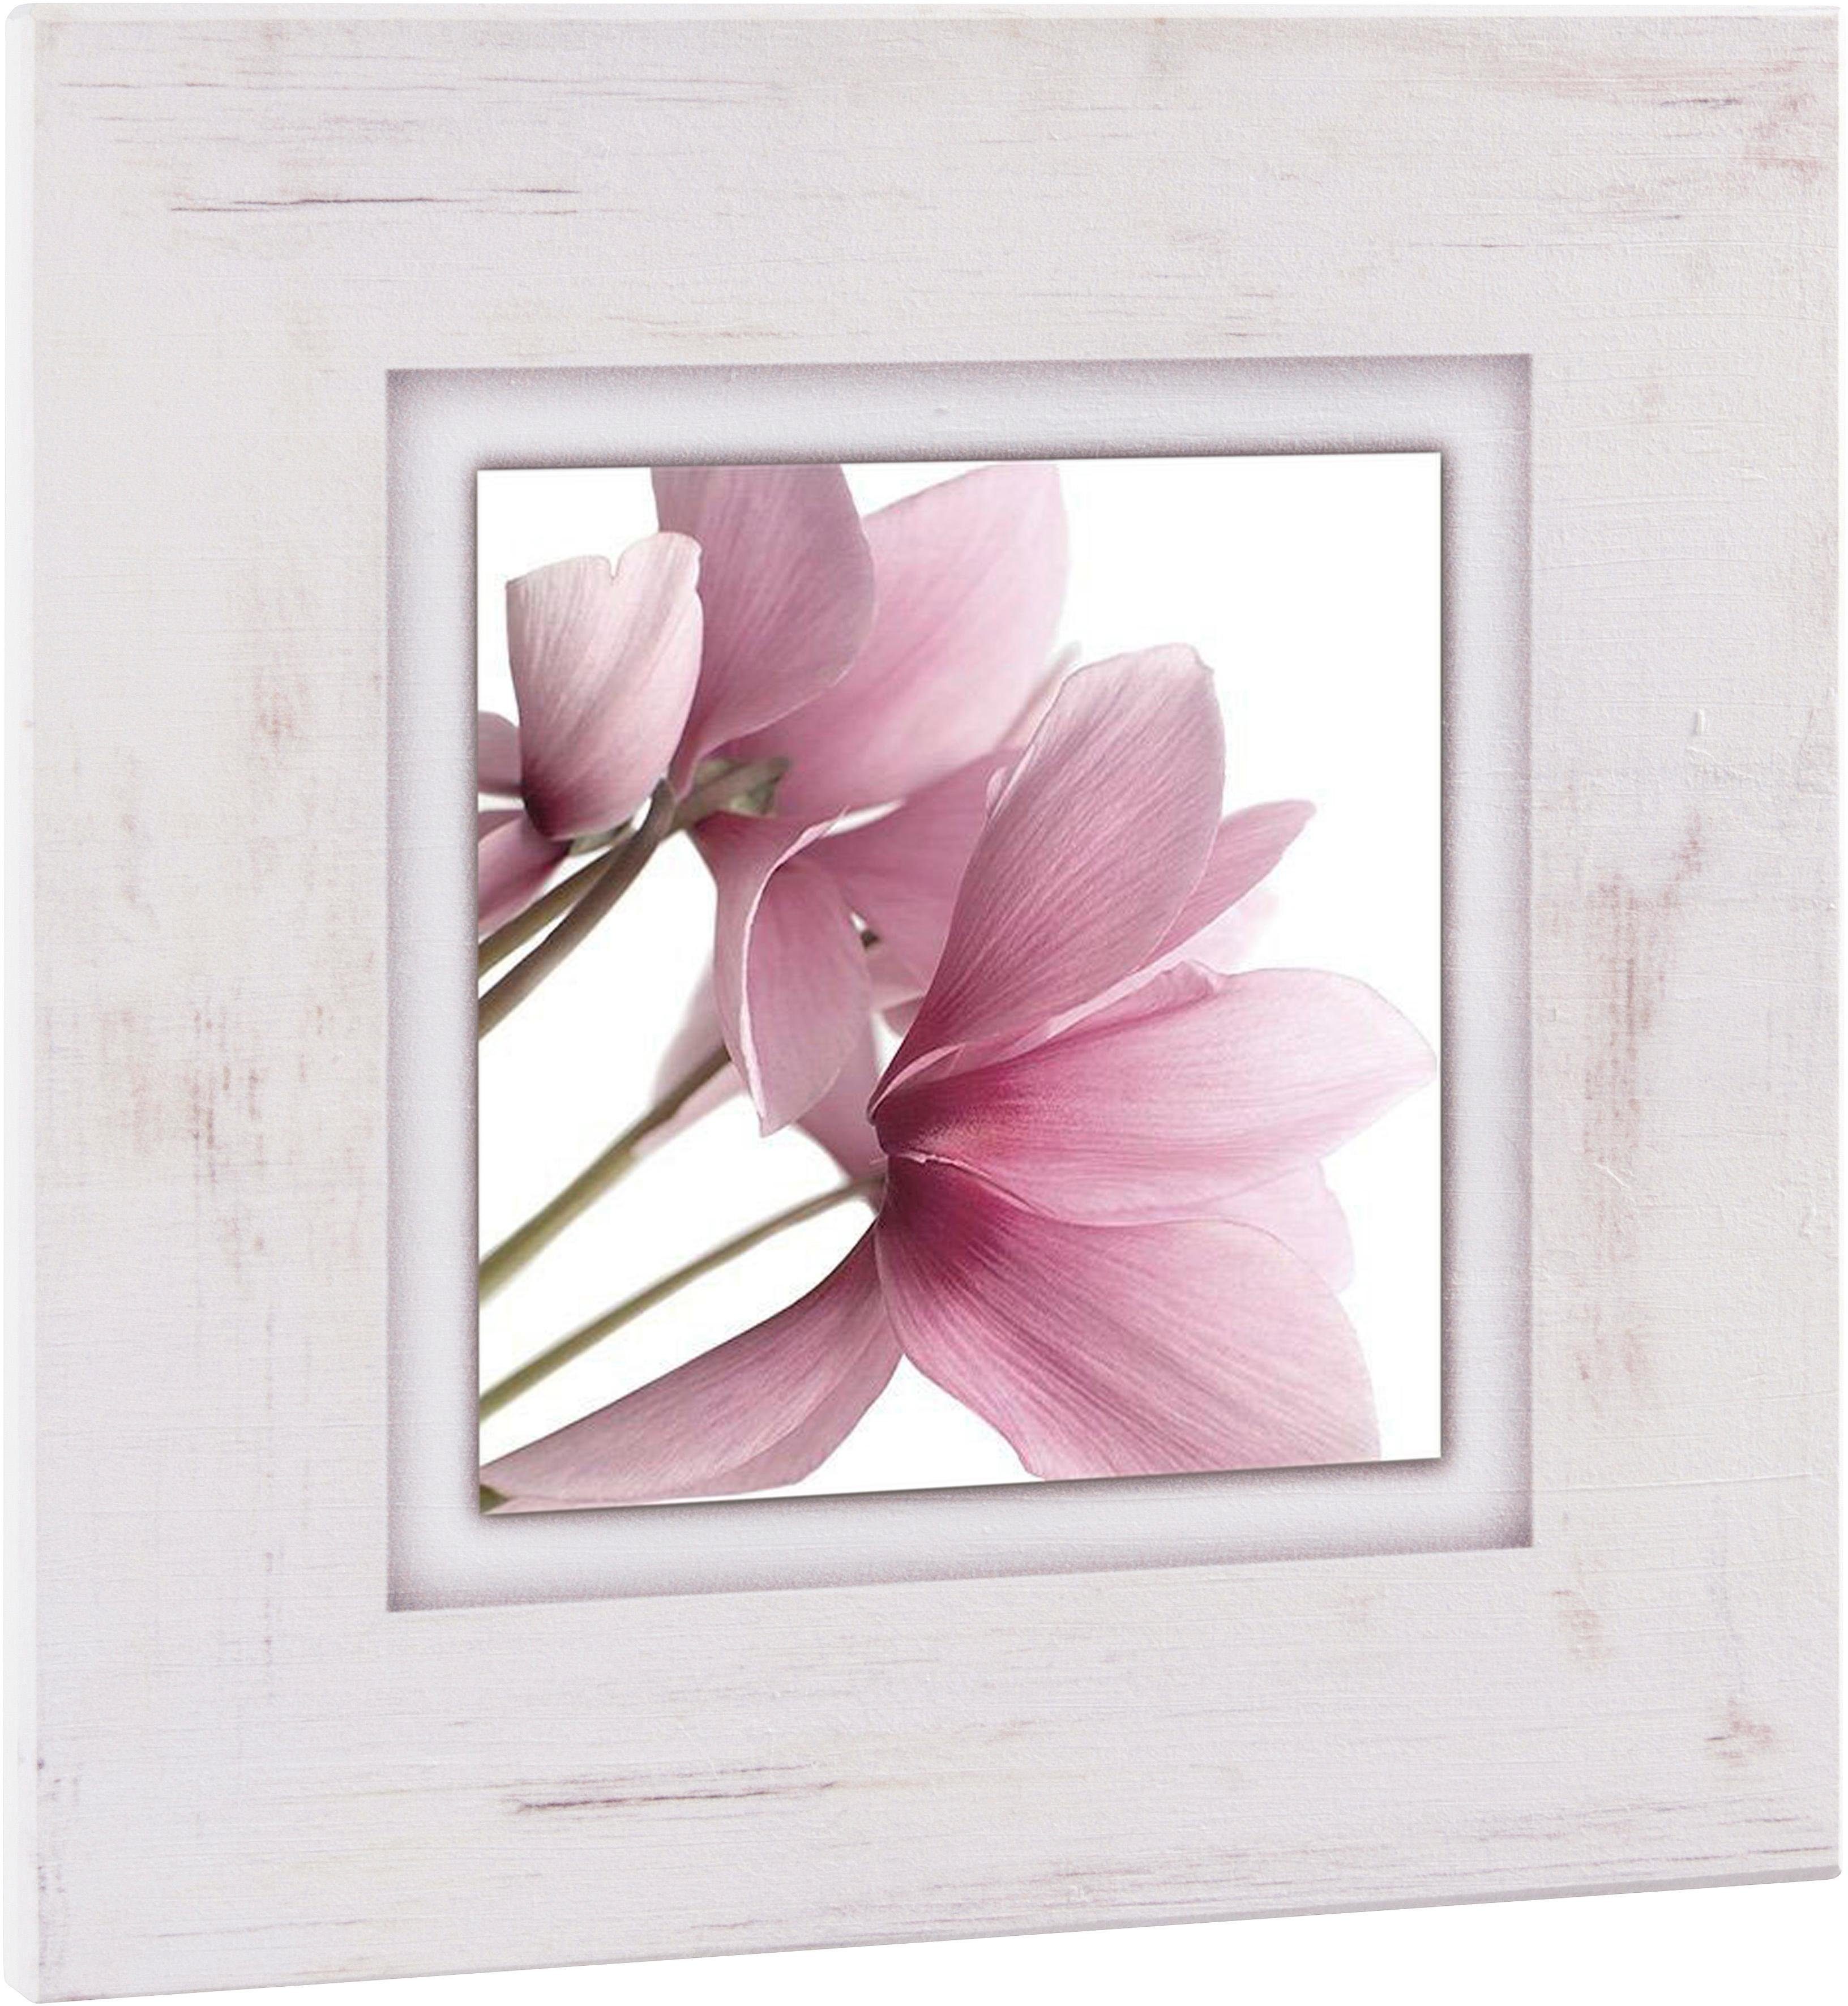 Home affaire Artprint op hout Roze viooltje 40/40 cm